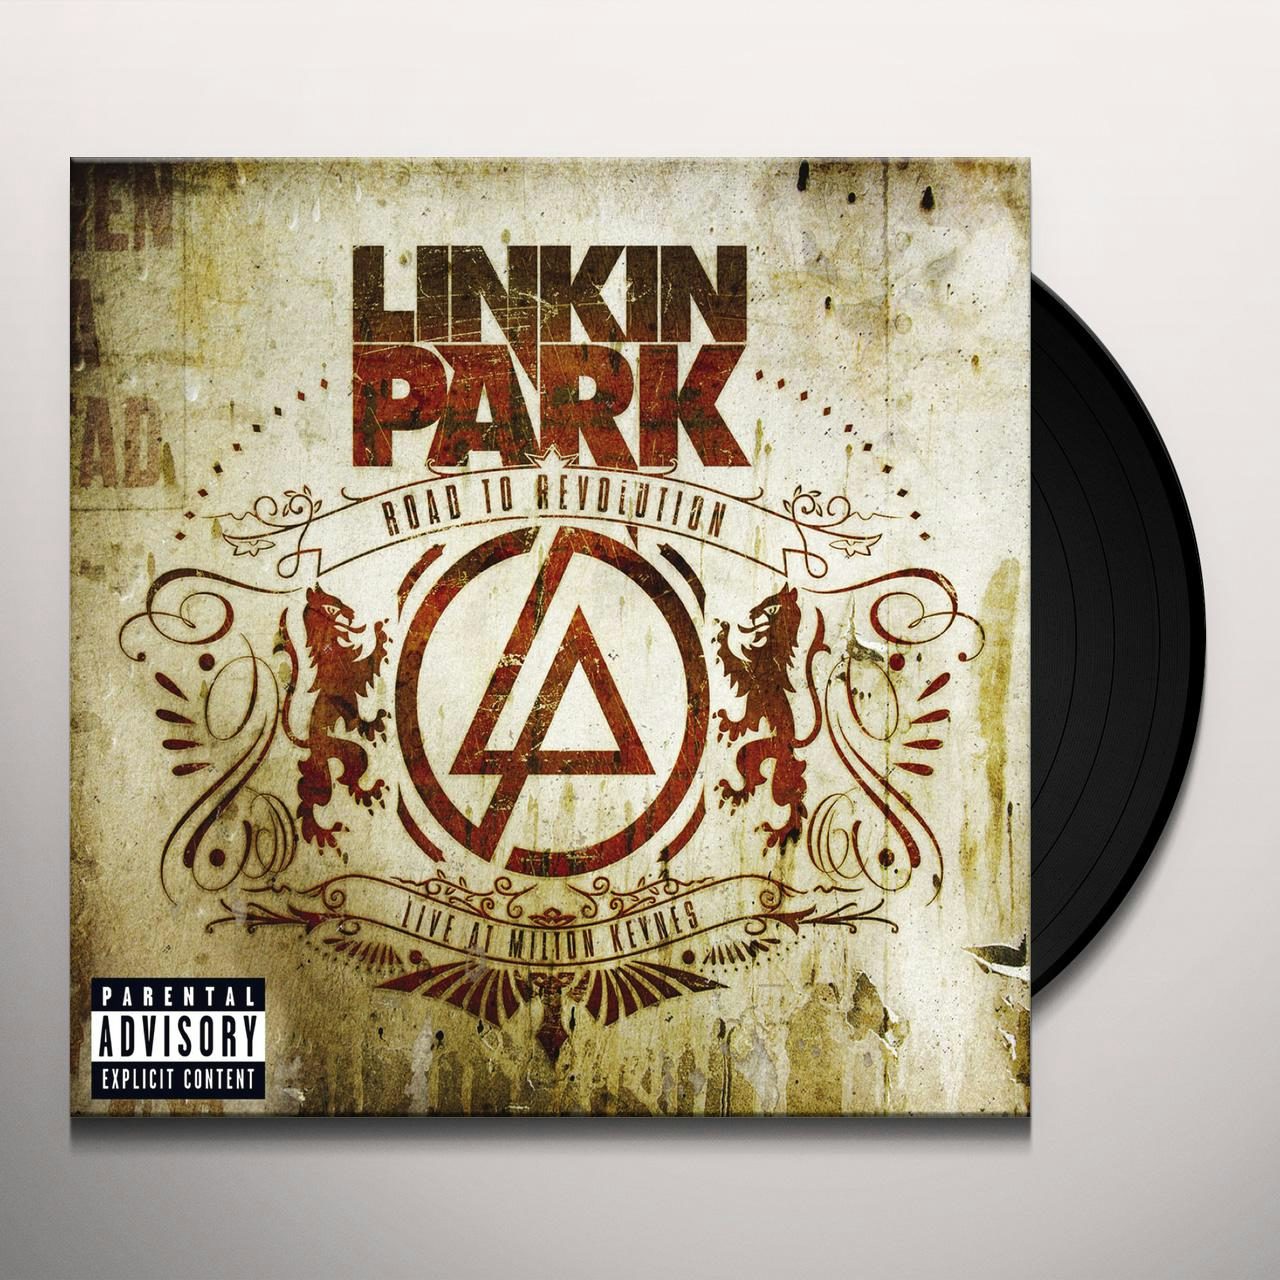 Linkin Park ROAD TO REVOLUTION: LIVE AT MILTON KEYNES Vinyl Record